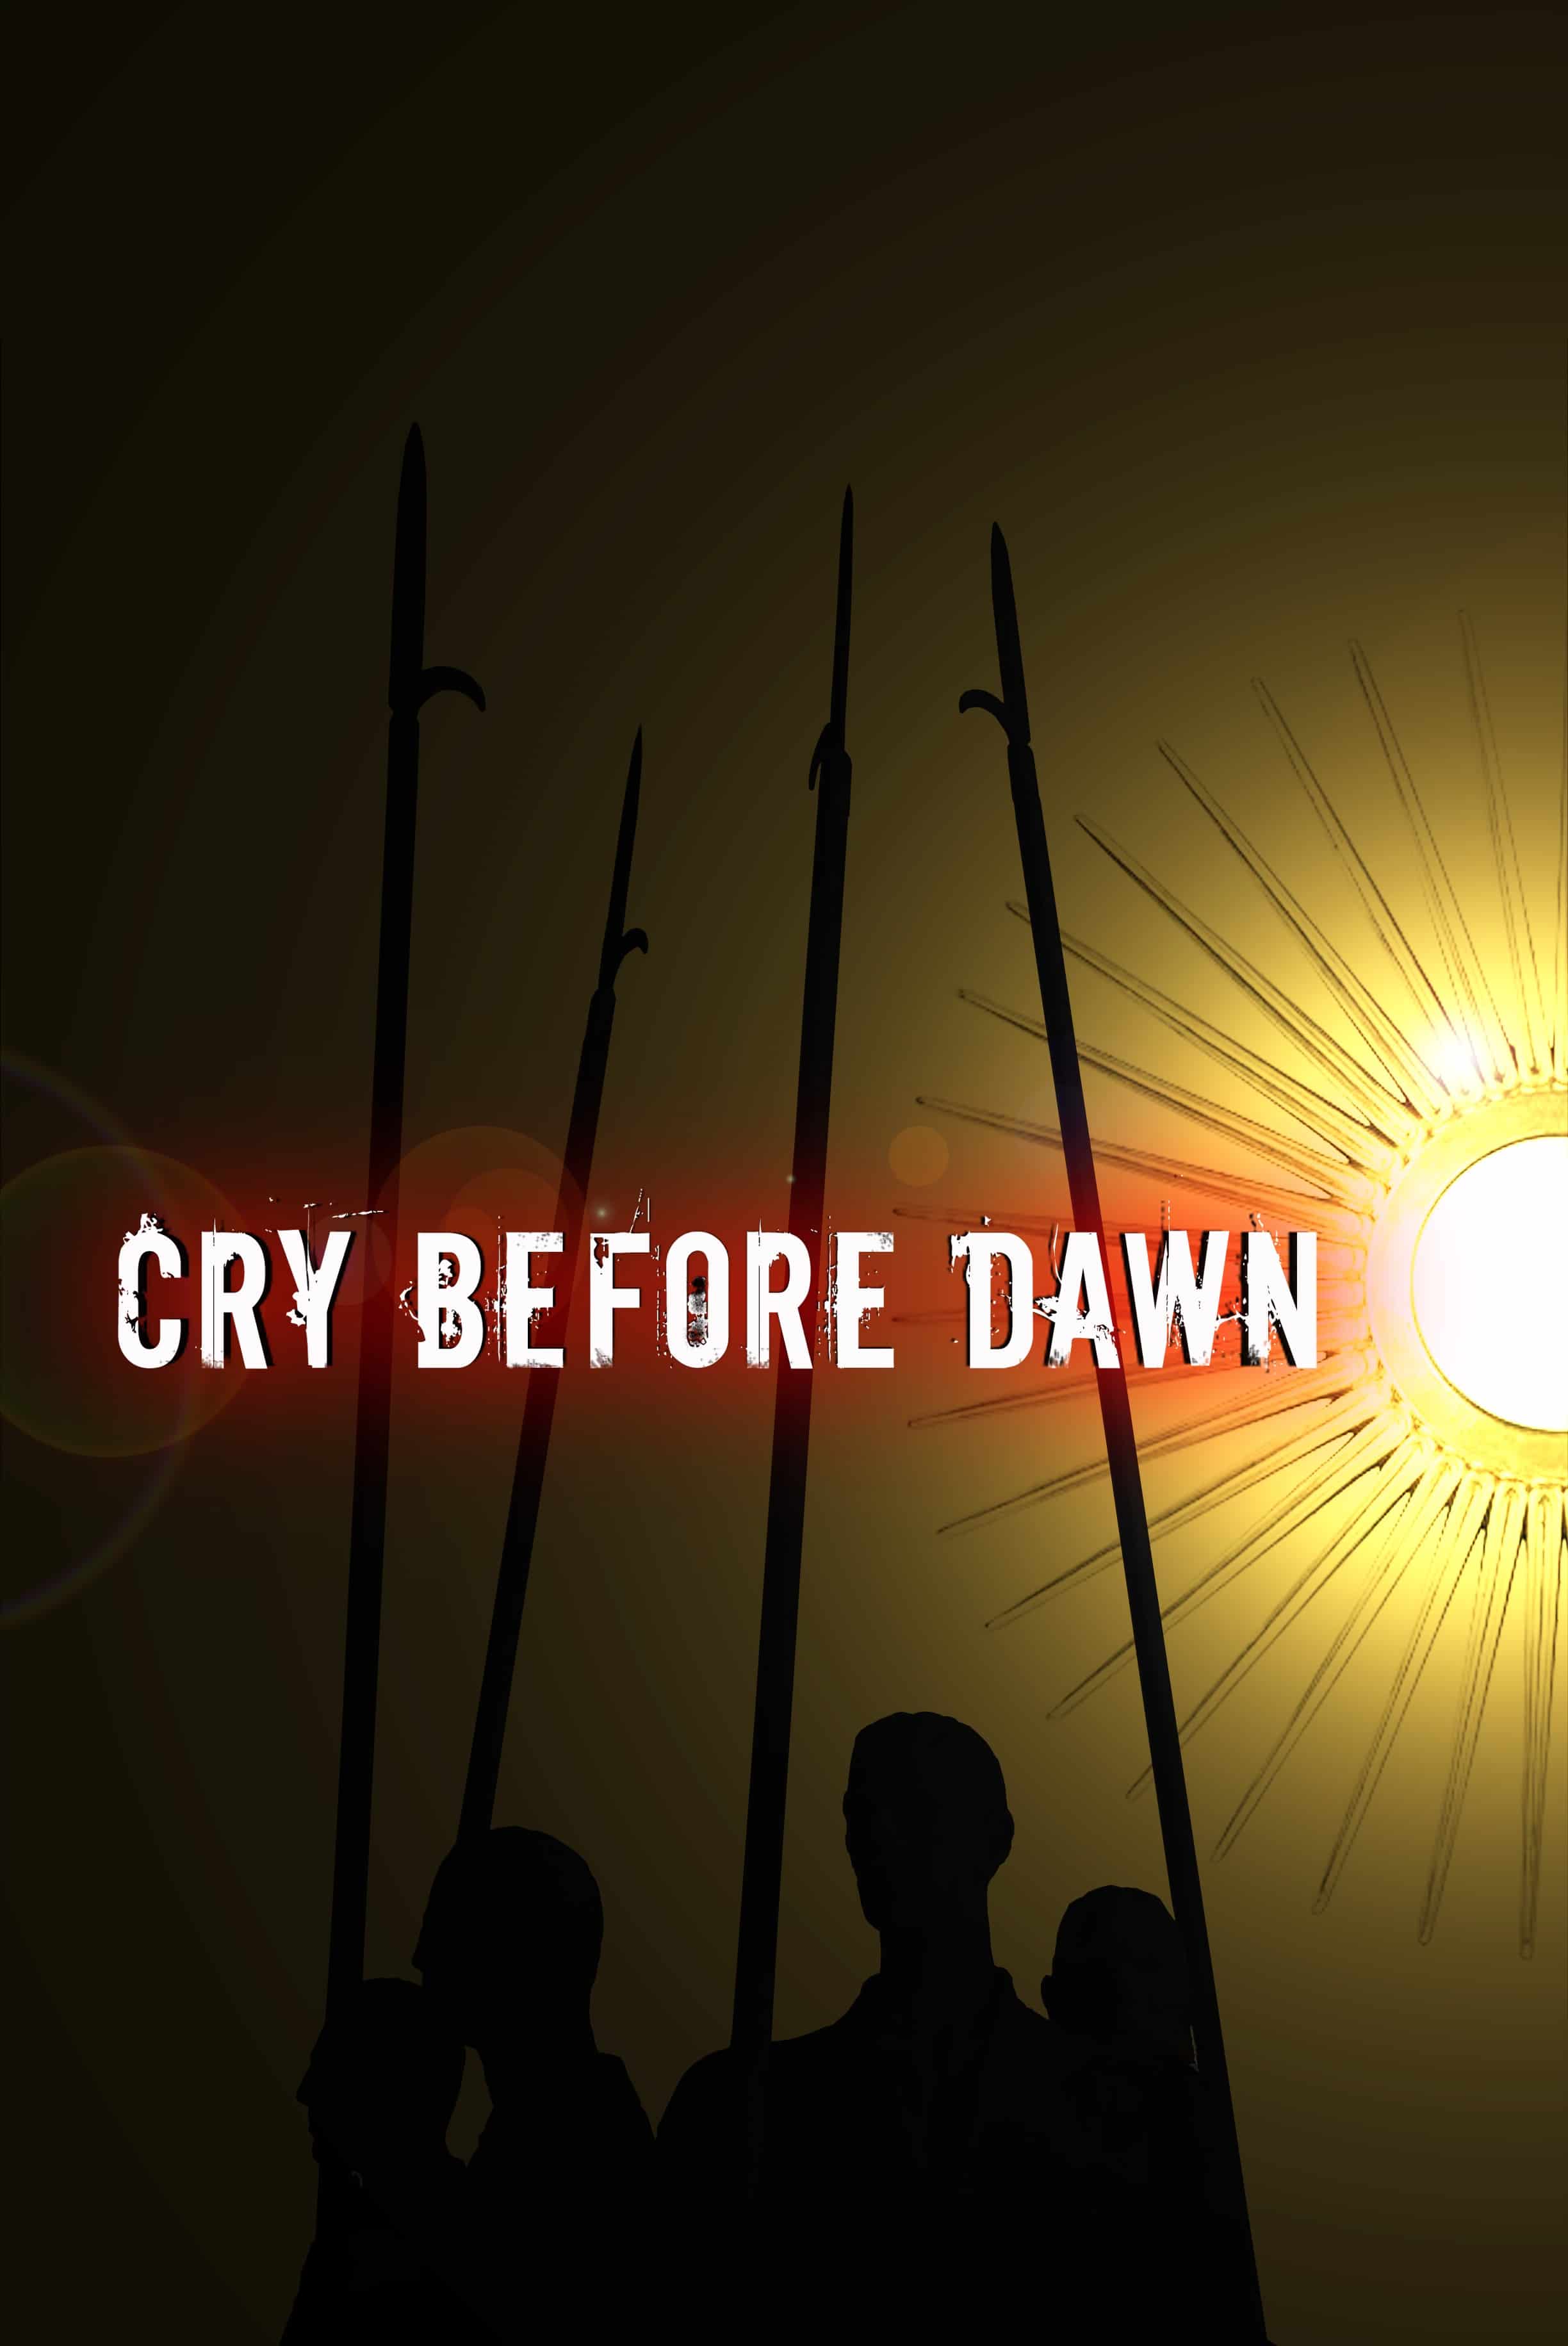 Cry Before Dawn